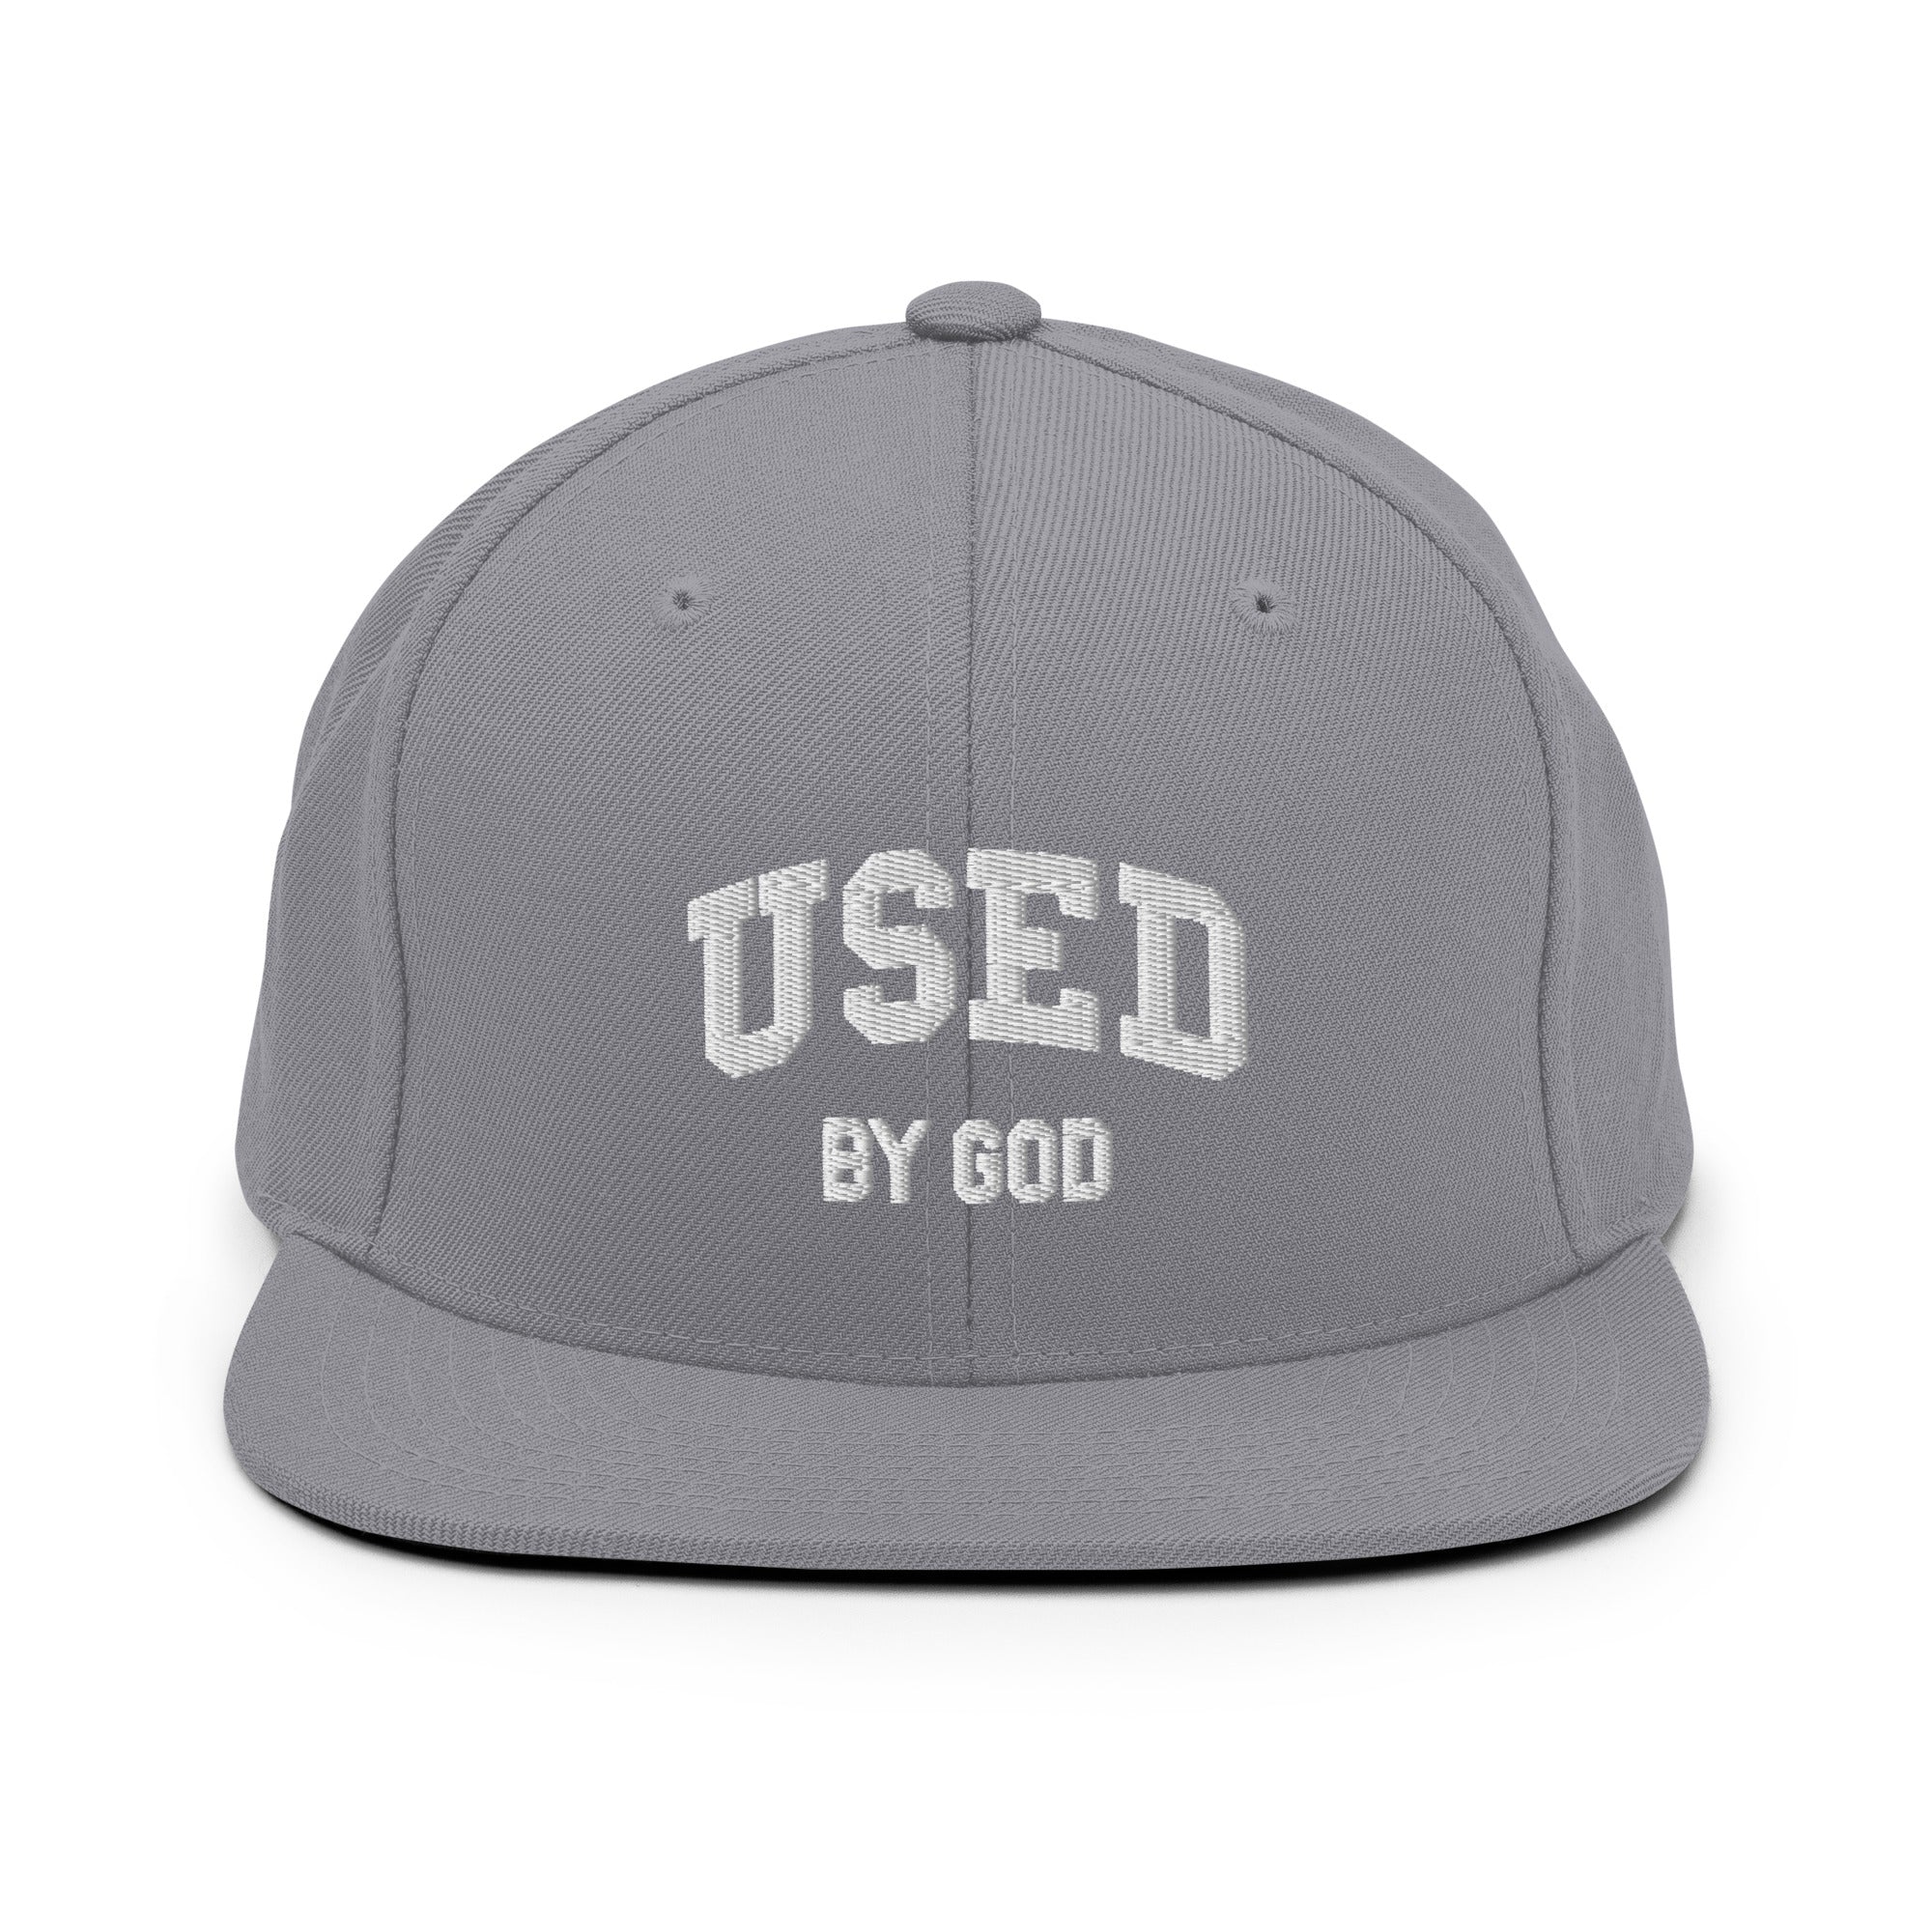 UBG Collegiate Snapback Hat